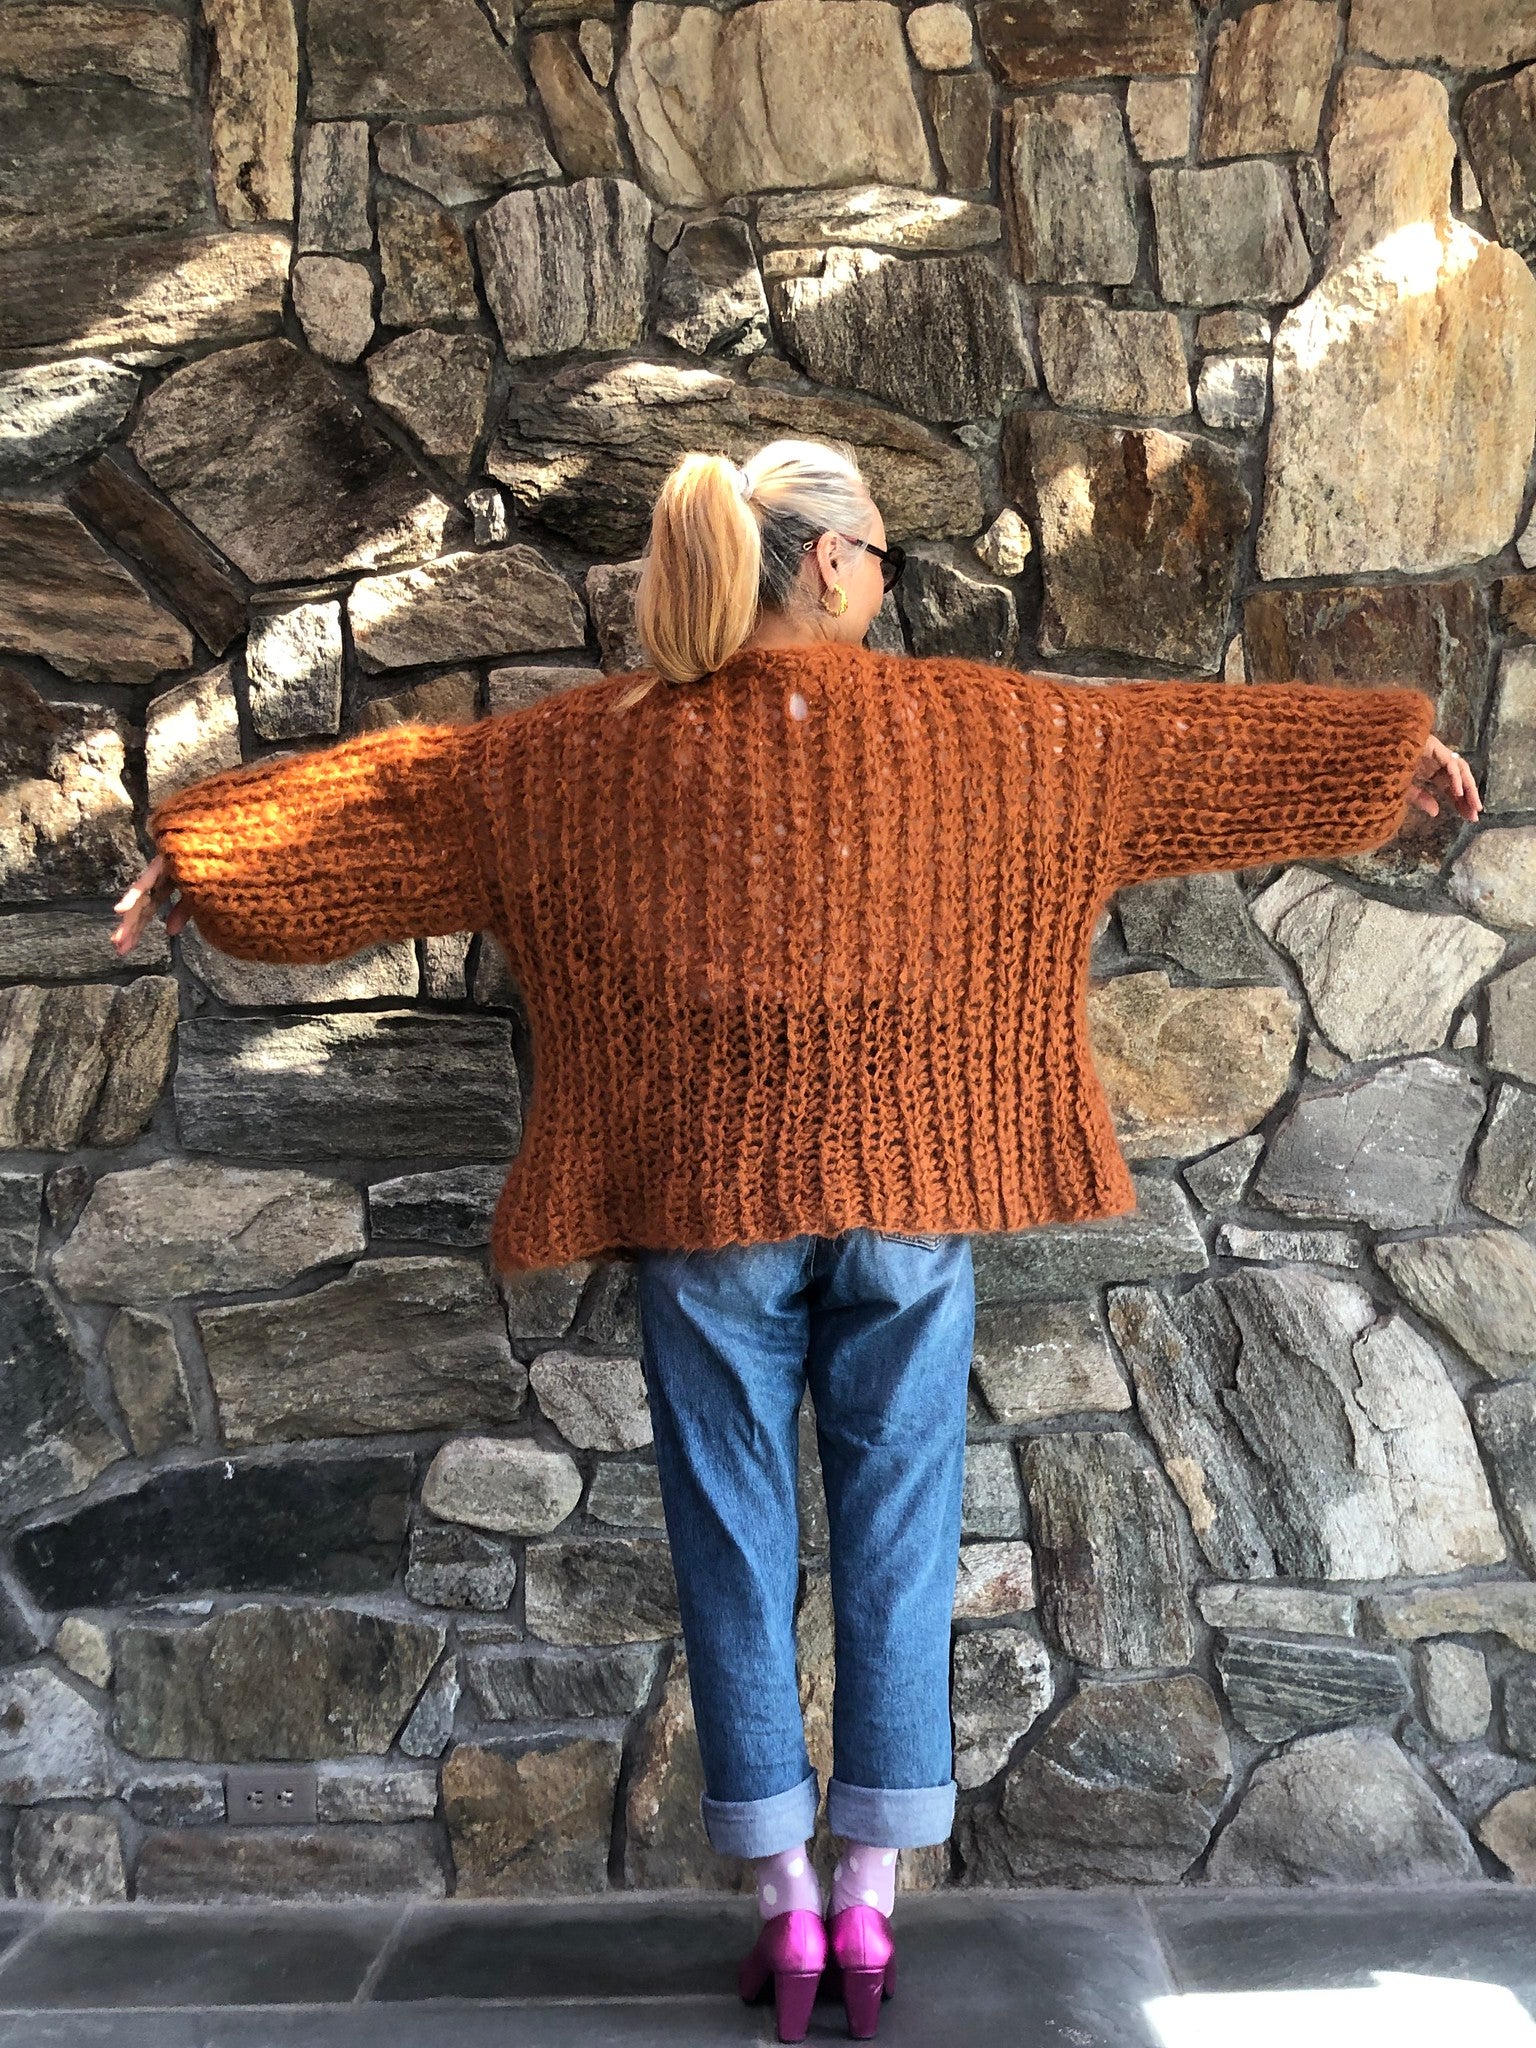 DIY Kit - Fisherman Rib Sweater - Mohair So Soft